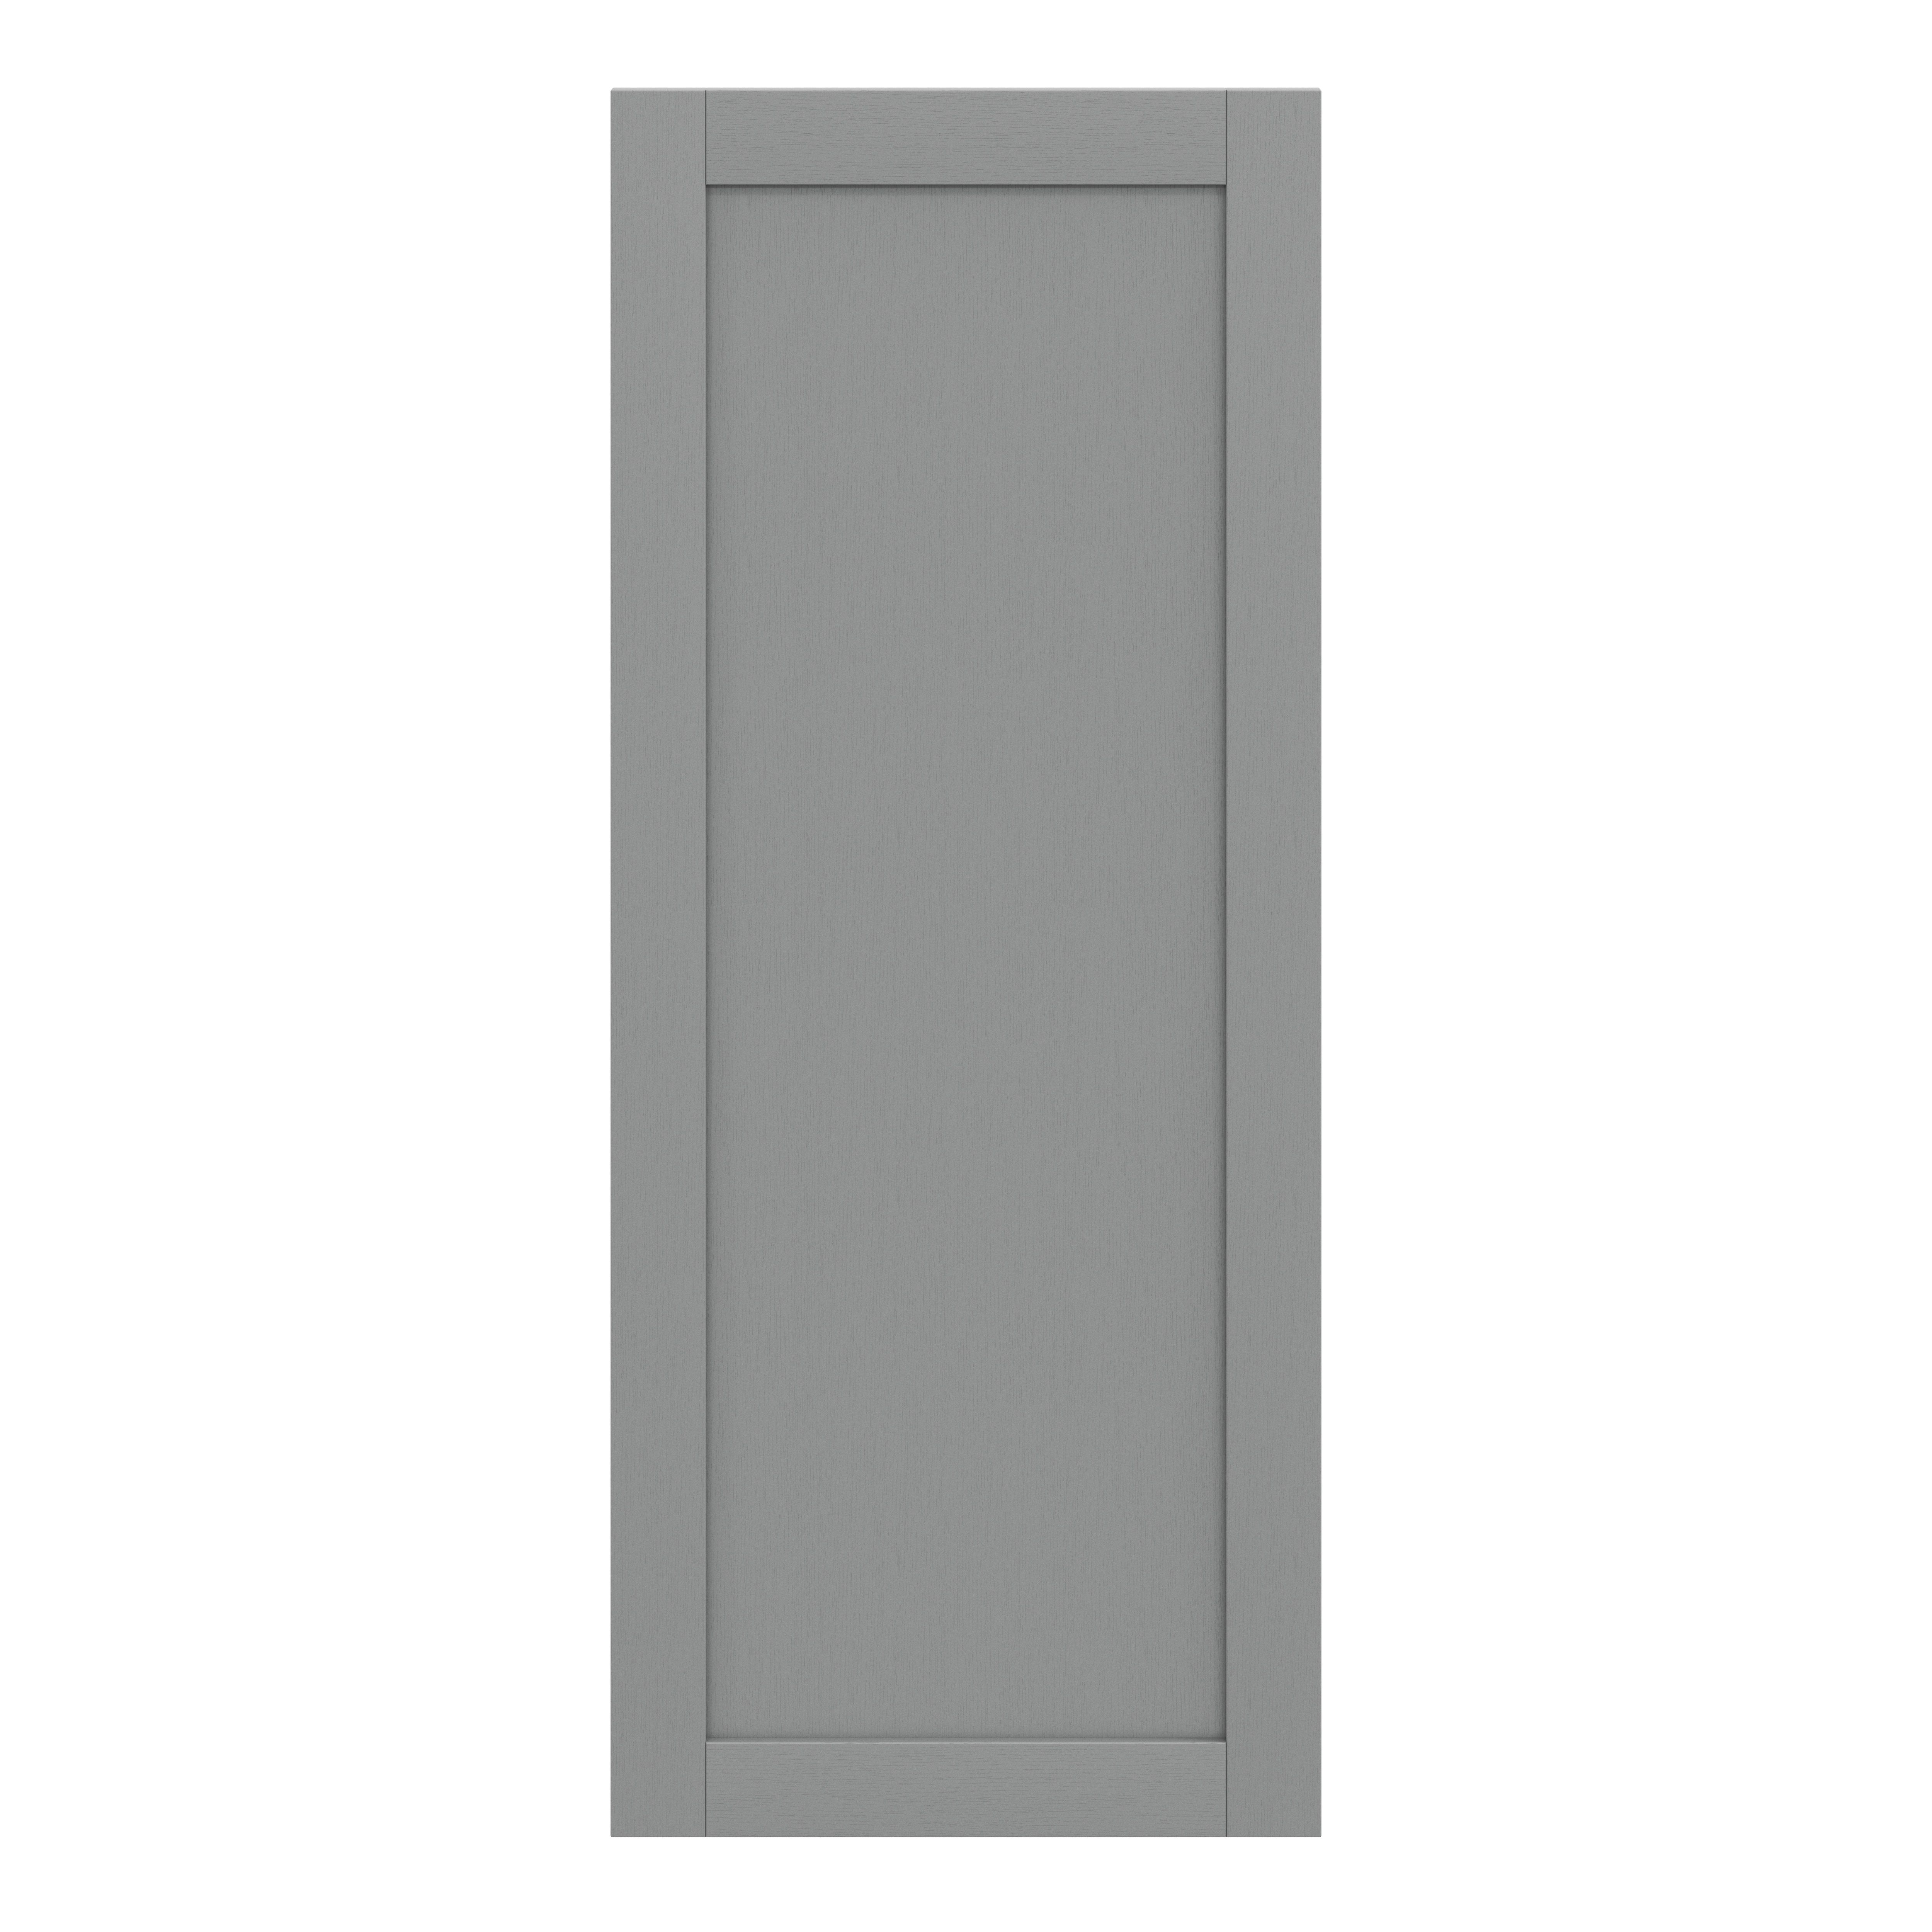 GoodHome Alpinia Matt Slate Grey Painted Wood Effect Shaker Tall larder Cabinet door (W)600mm (H)1467mm (T)18mm